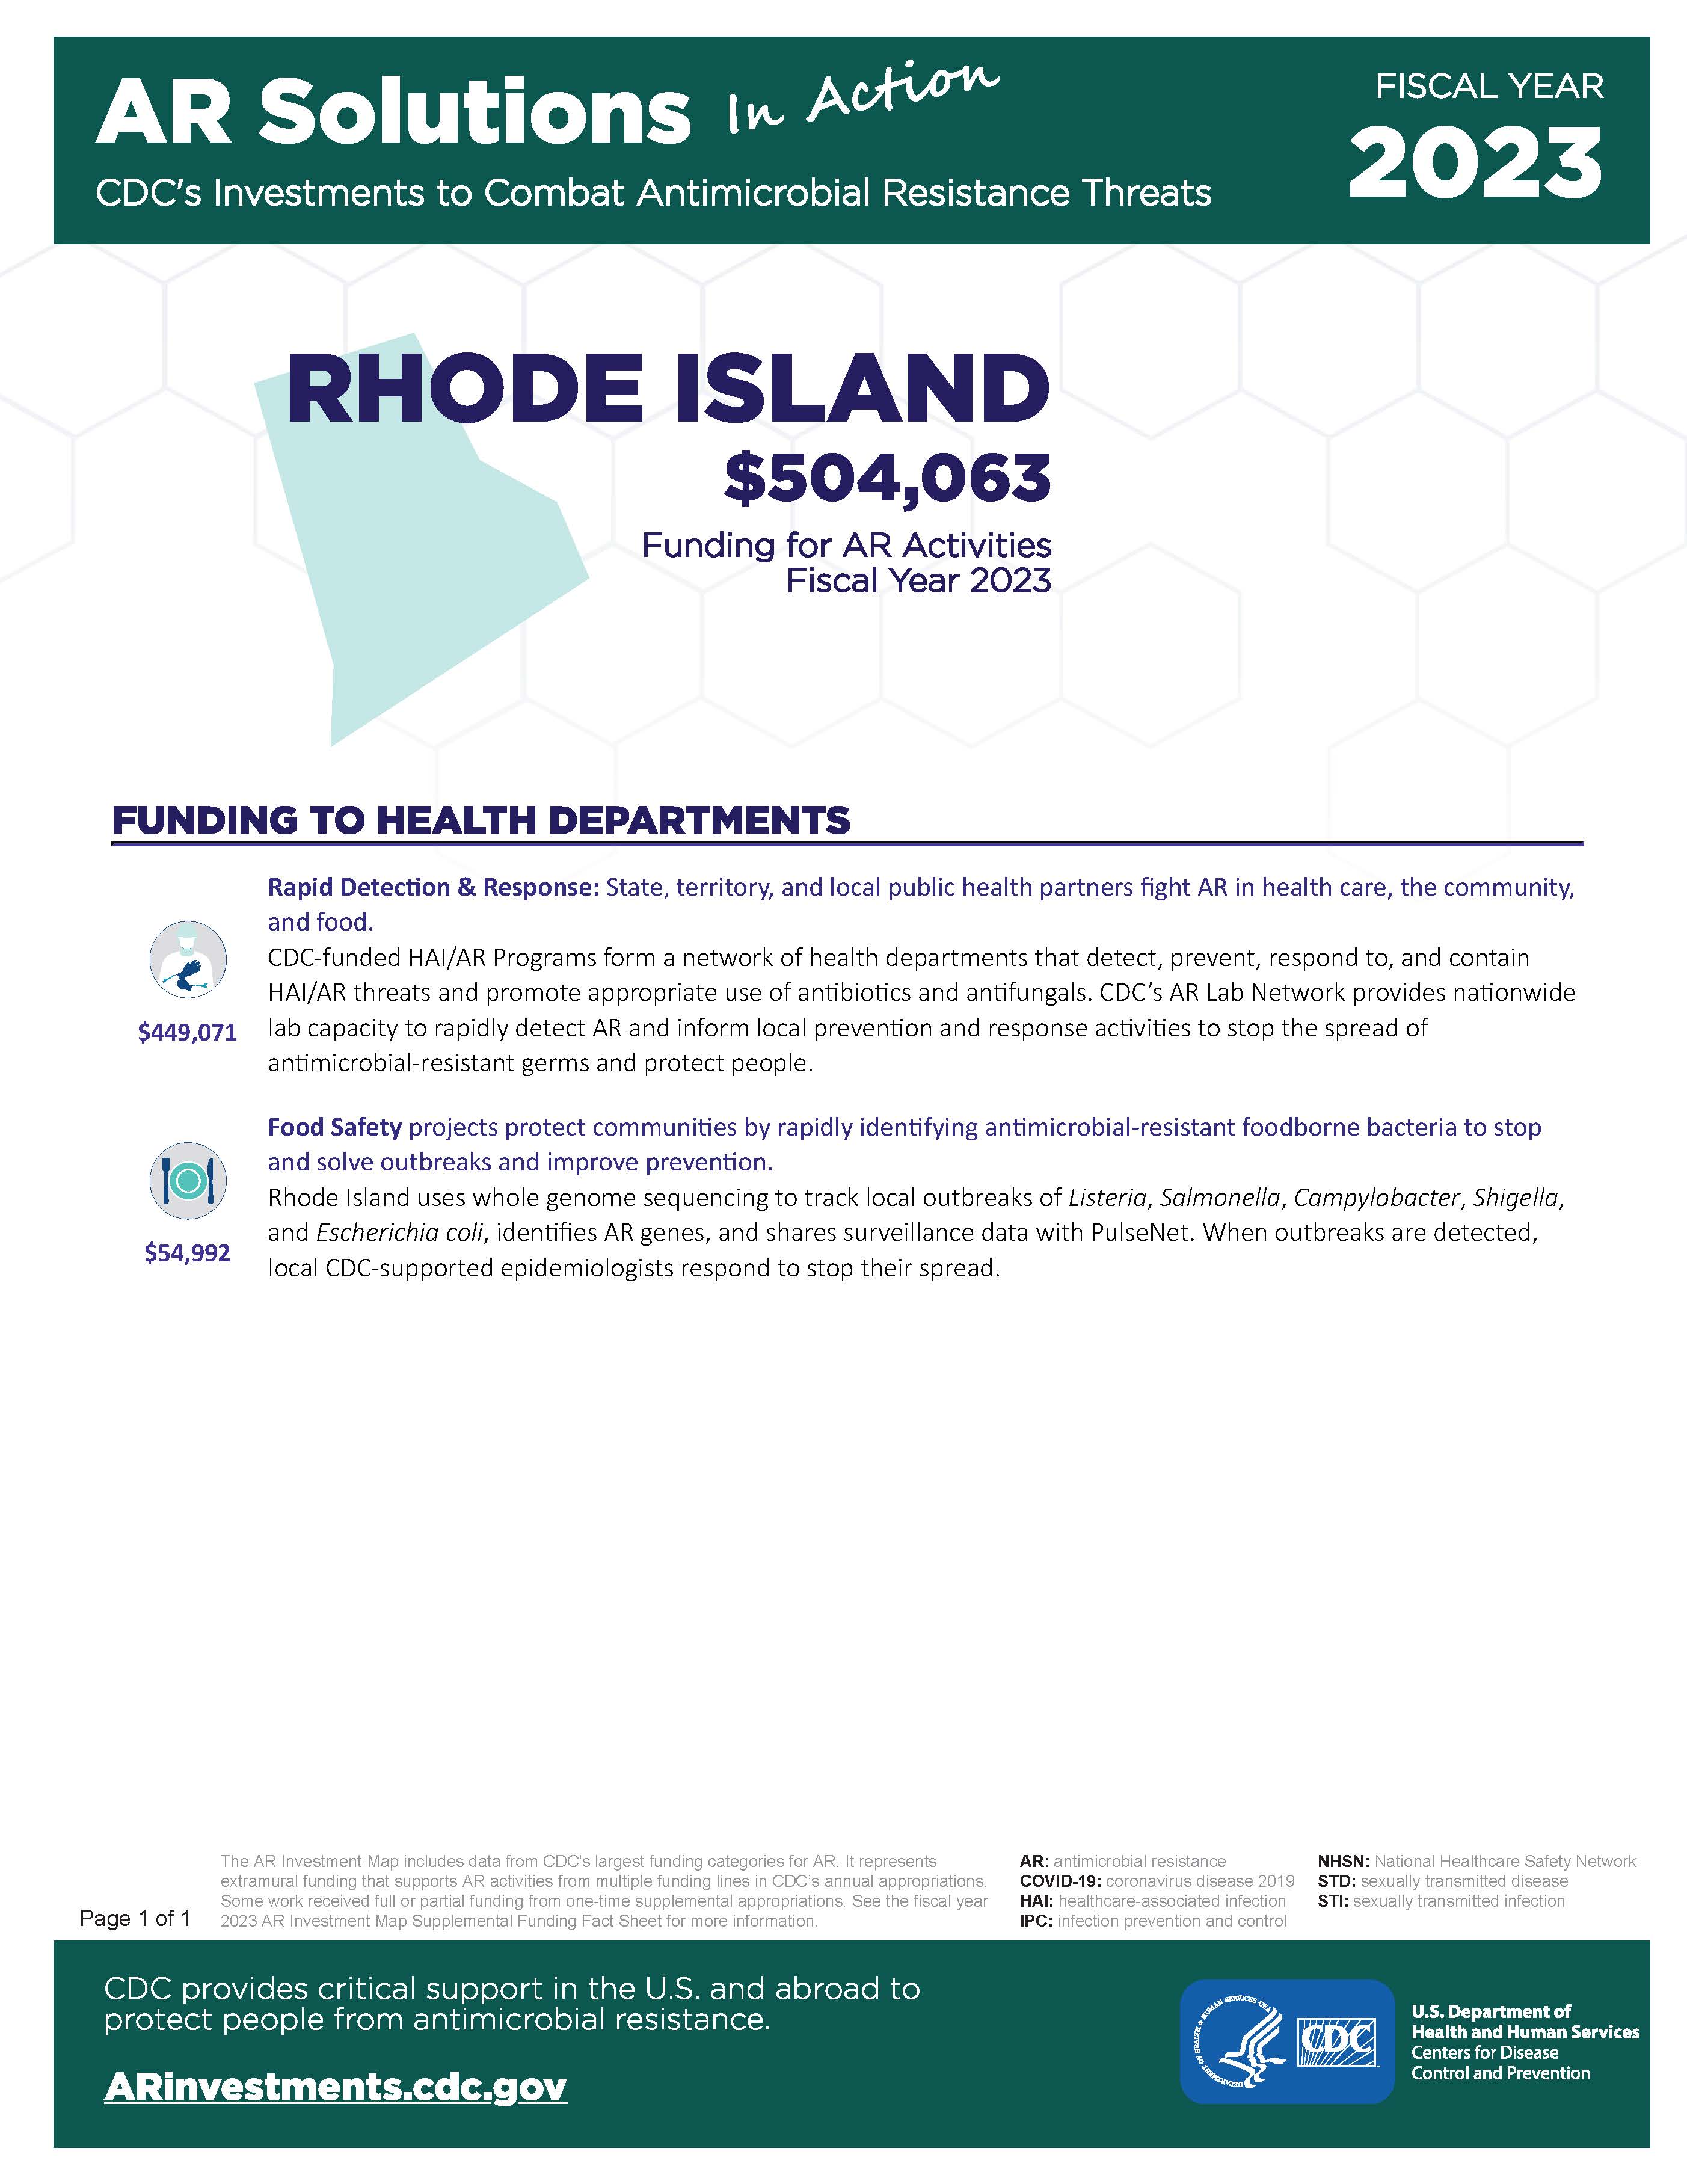 View Factsheet for Rhode Island